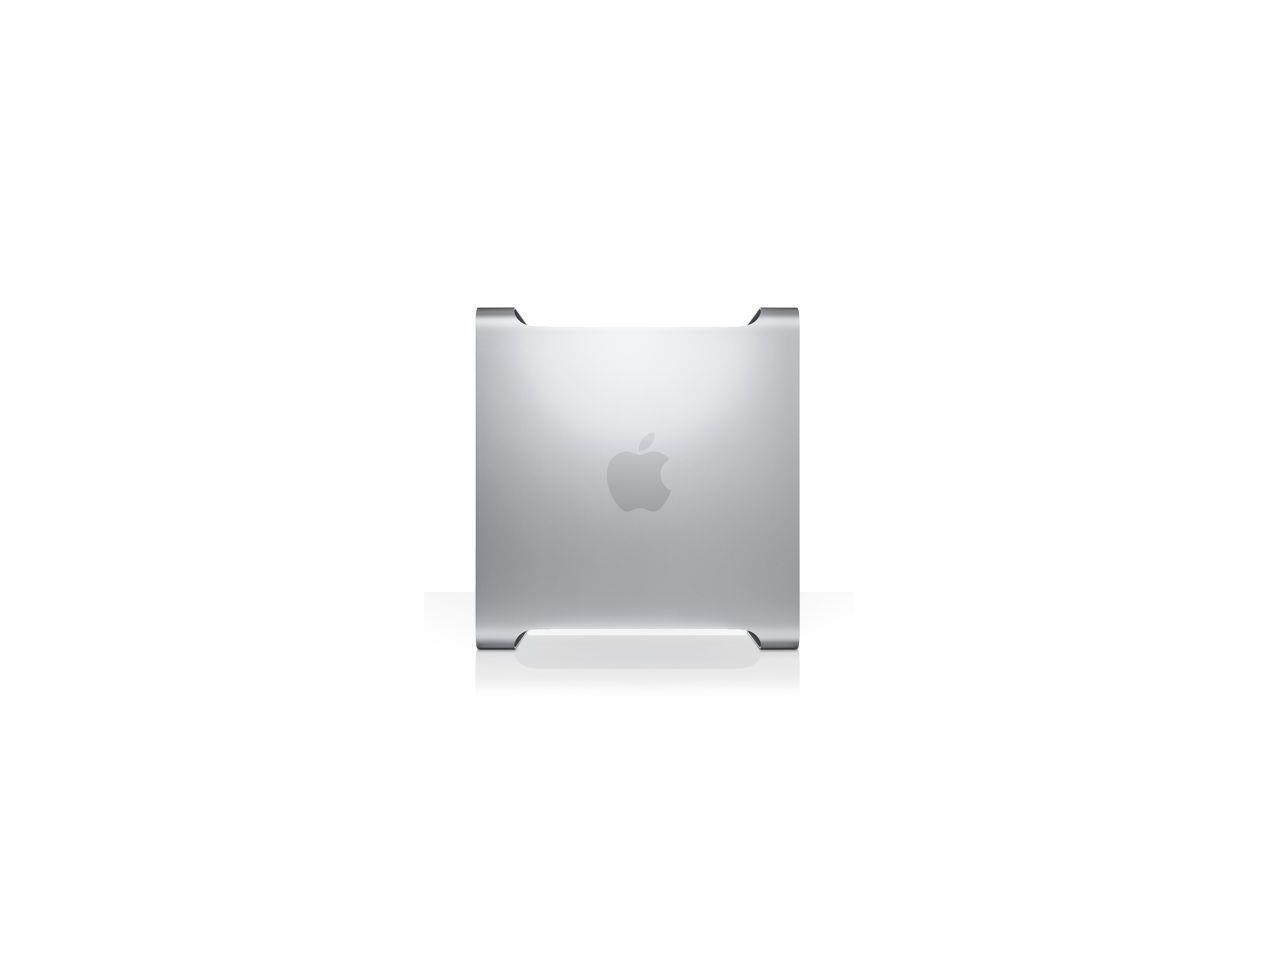 Mac Pro "Eight Core" 2.8 (3,1) A1186, MA970LL/A - 2x Quad Core Intel Xeon E5462@2.80GHz, 8GB RAM, 500GB HDD, 8X DL SuperDrive, OSX 10.5 - Atlas Computers & Electronics 